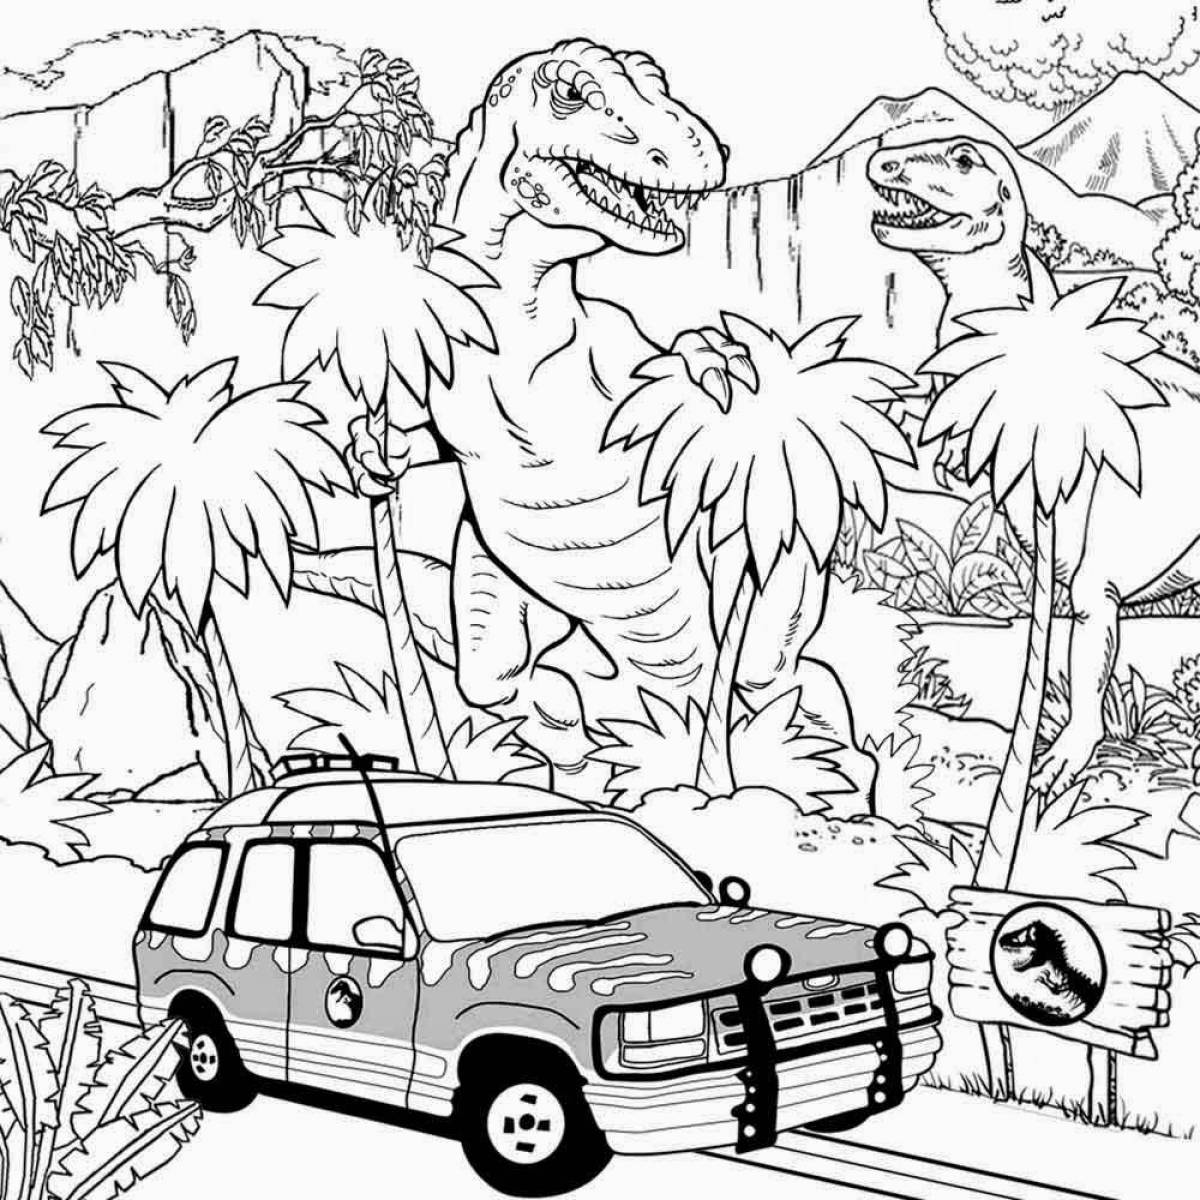 Amazing Jurassic World coloring book